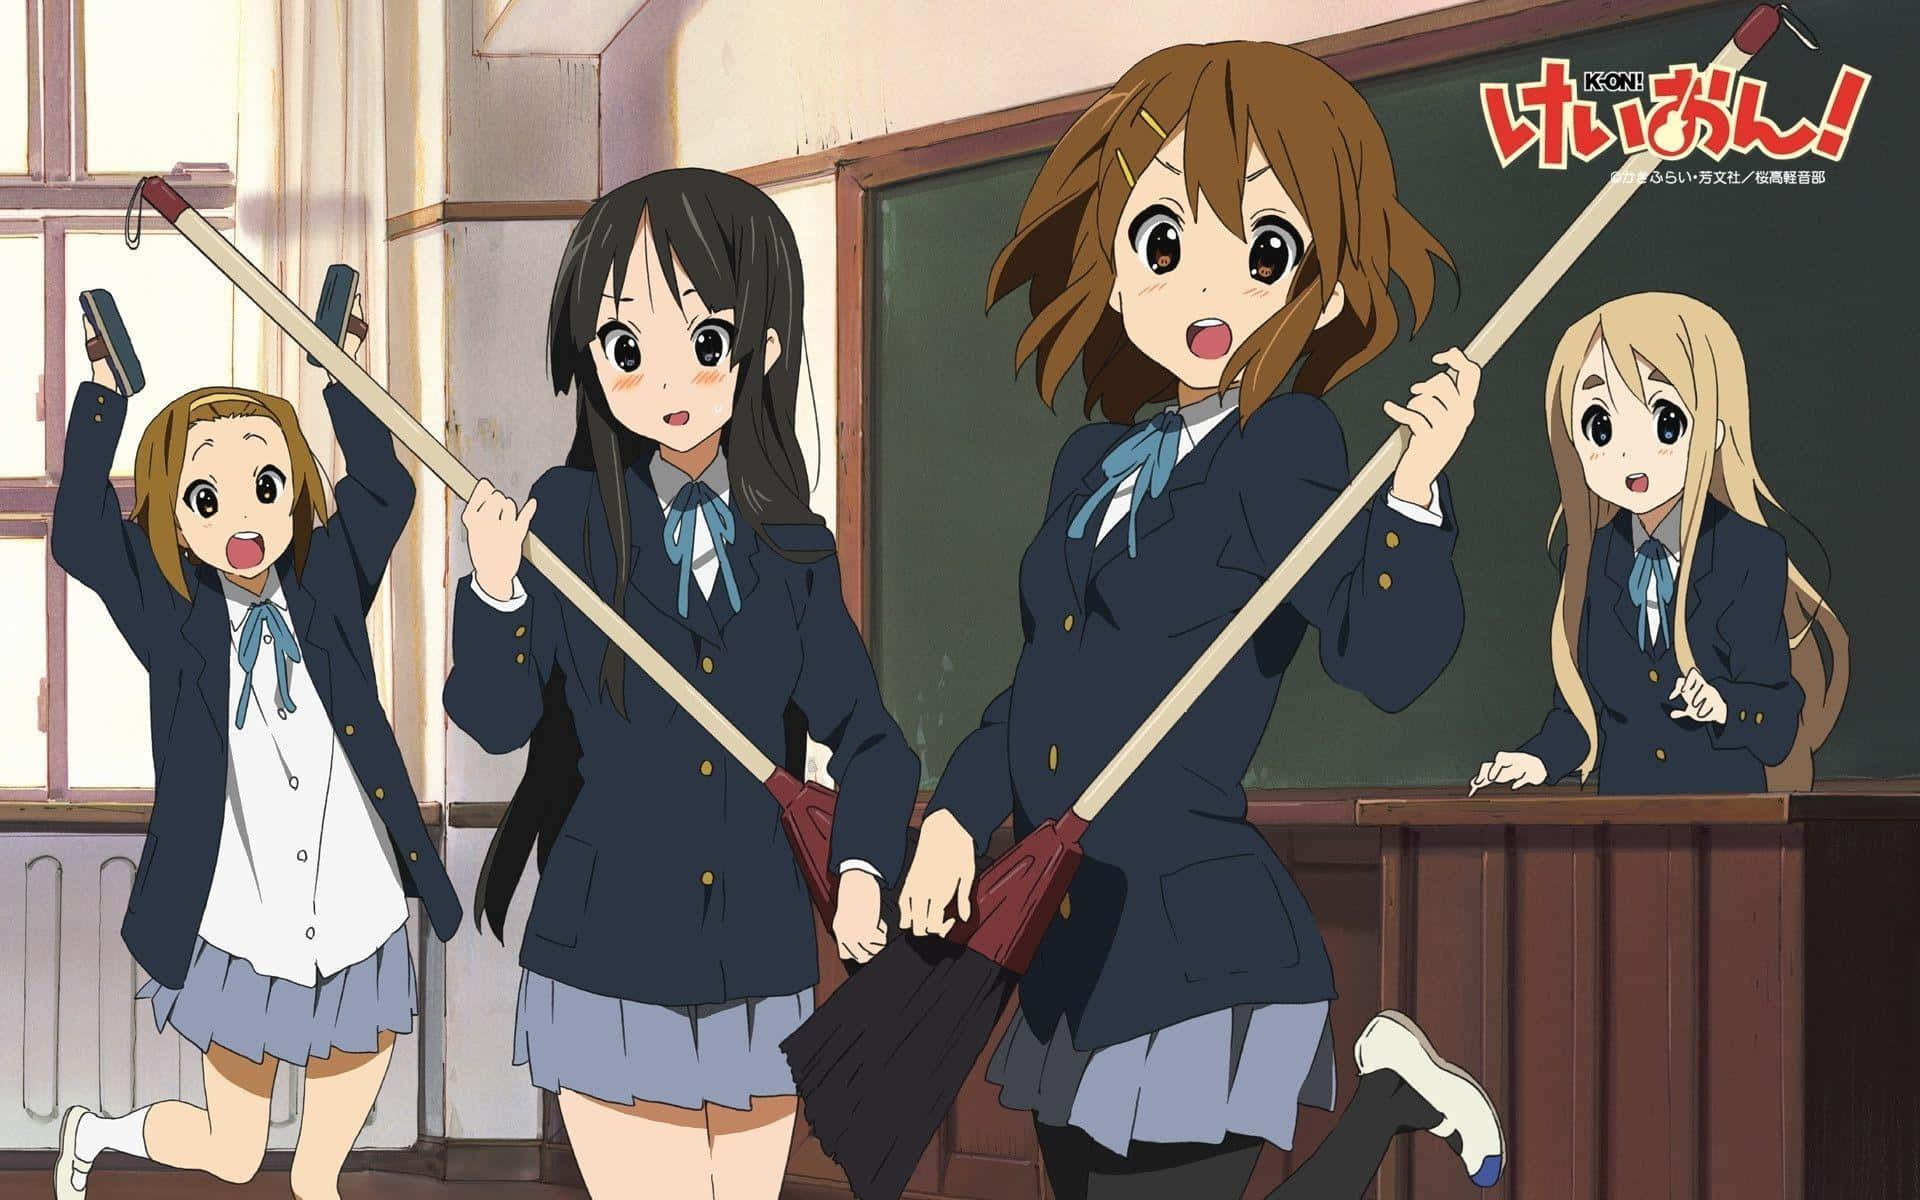 Anime Girls In Uniform Holding Brooms